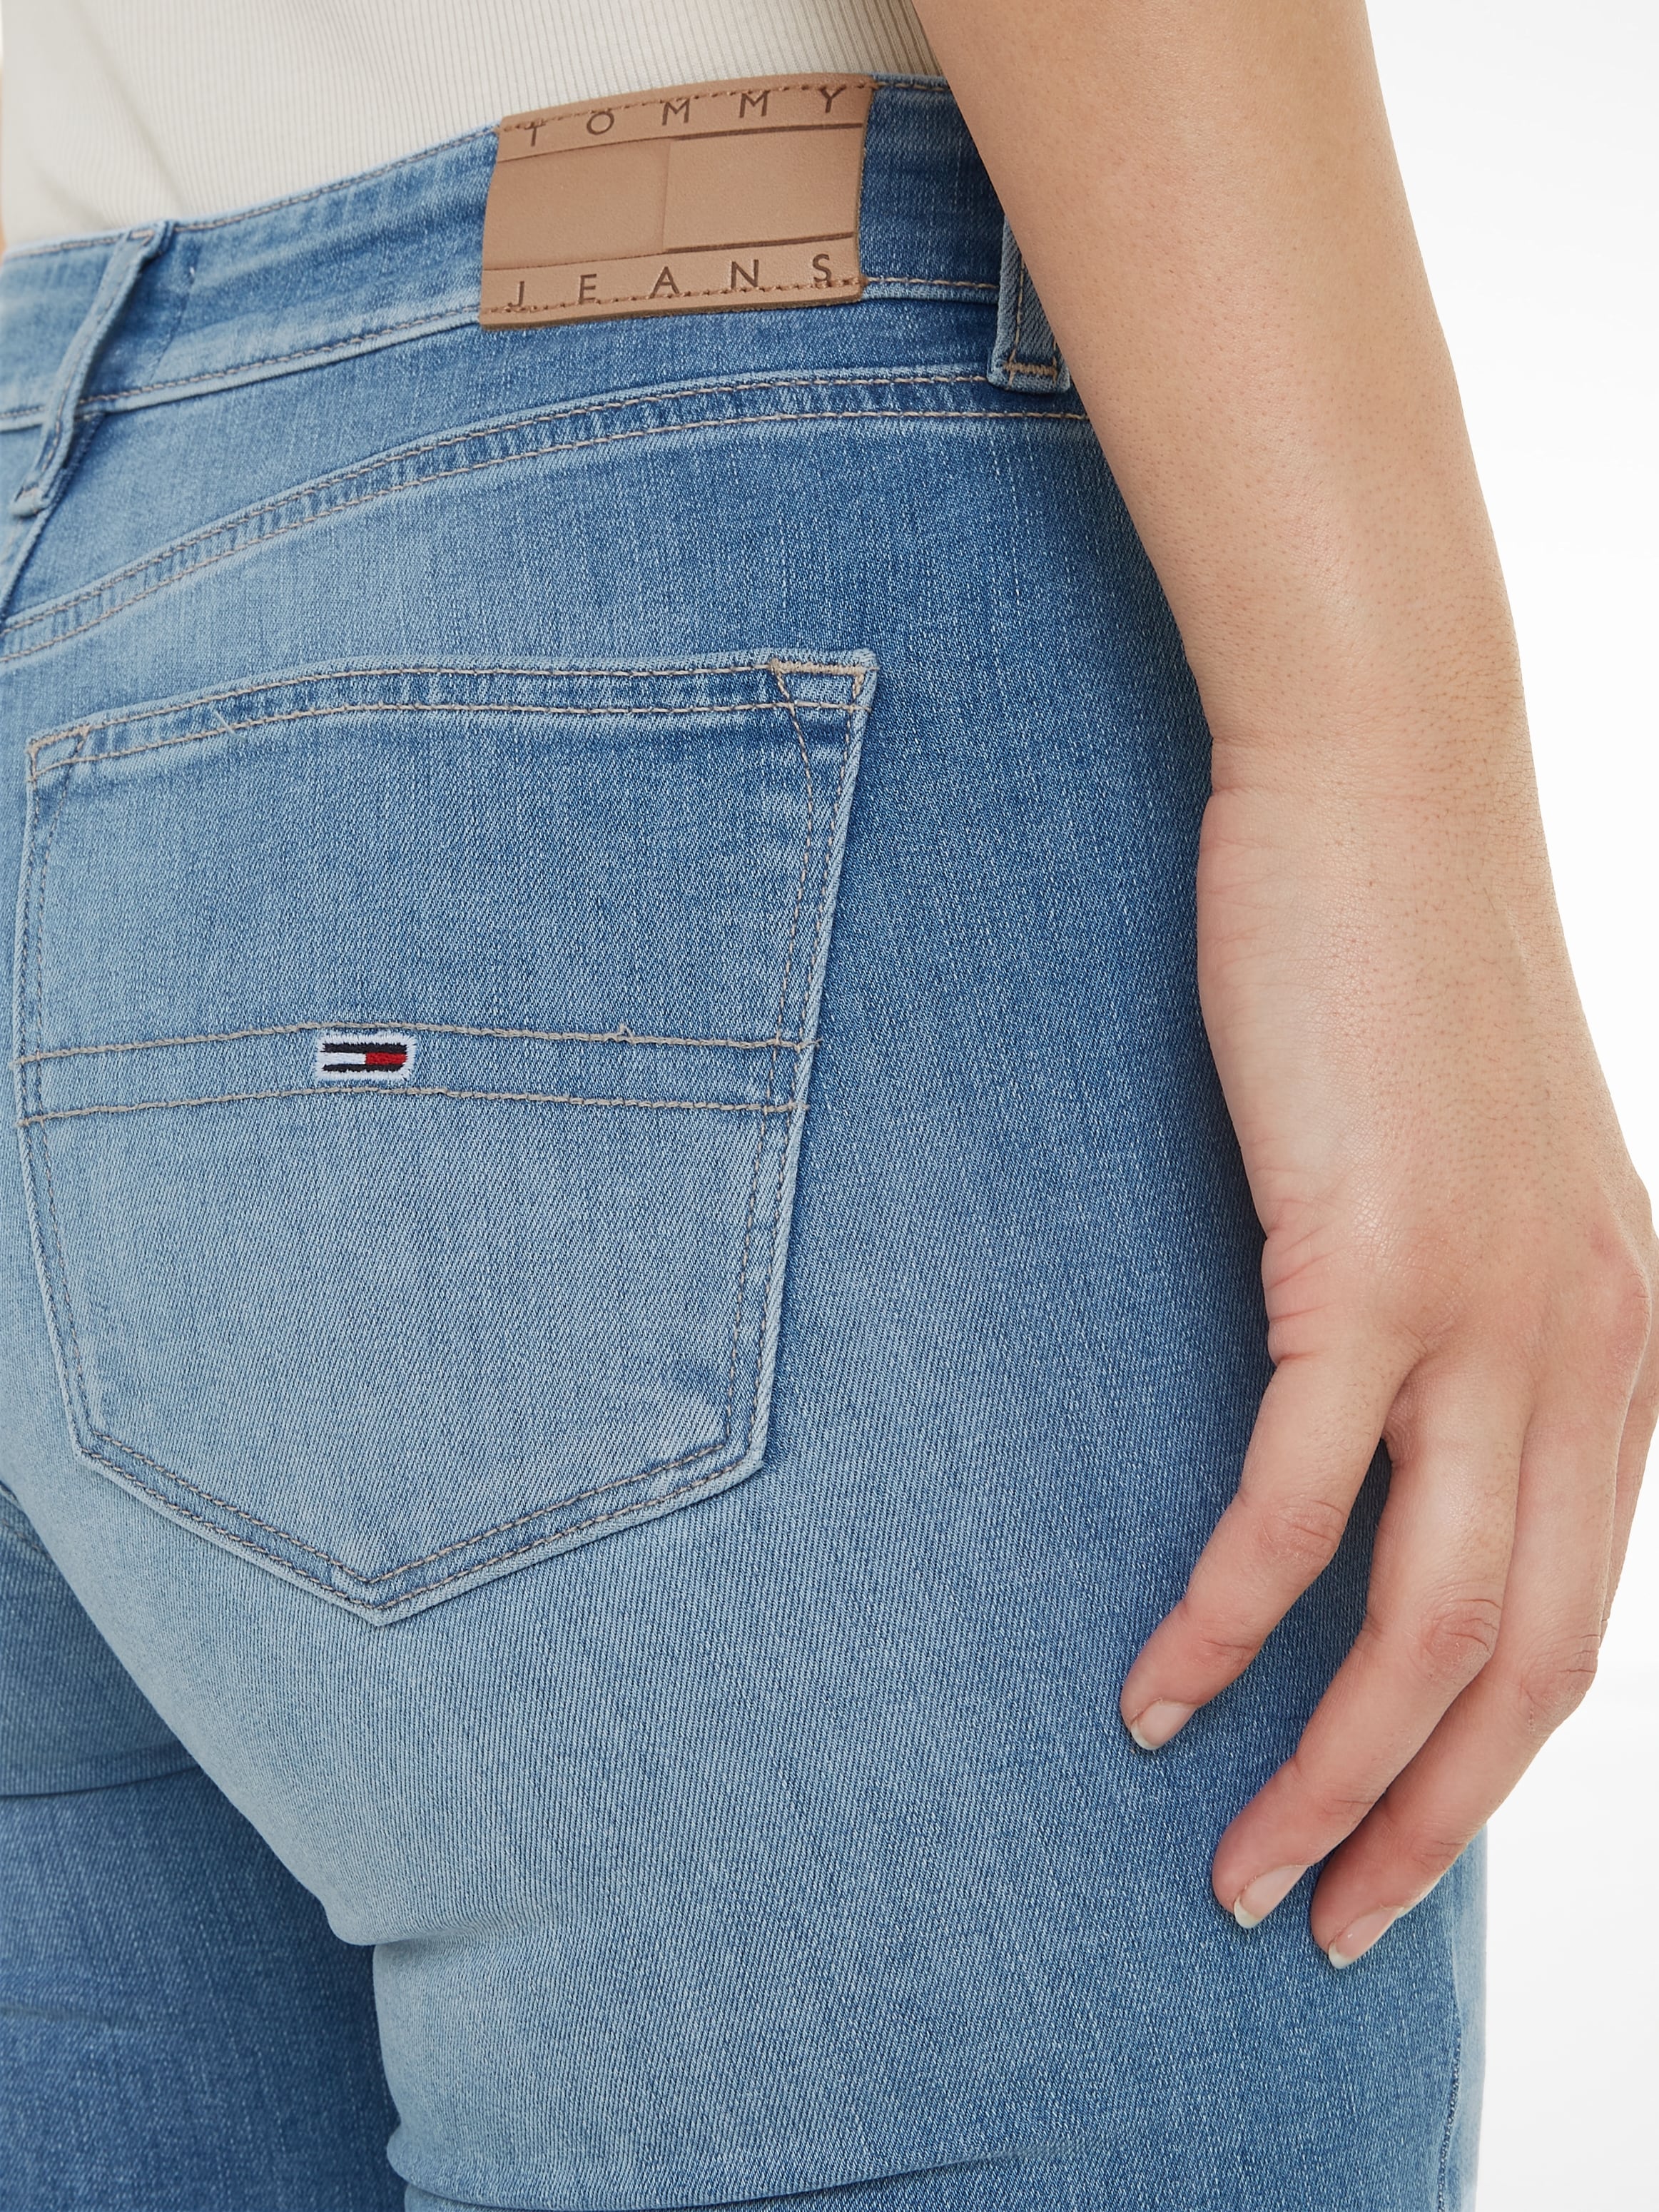 »Nora«, online Tommy Ledermarkenlabel | Jeans Bequeme mit Jeans I\'m kaufen walking